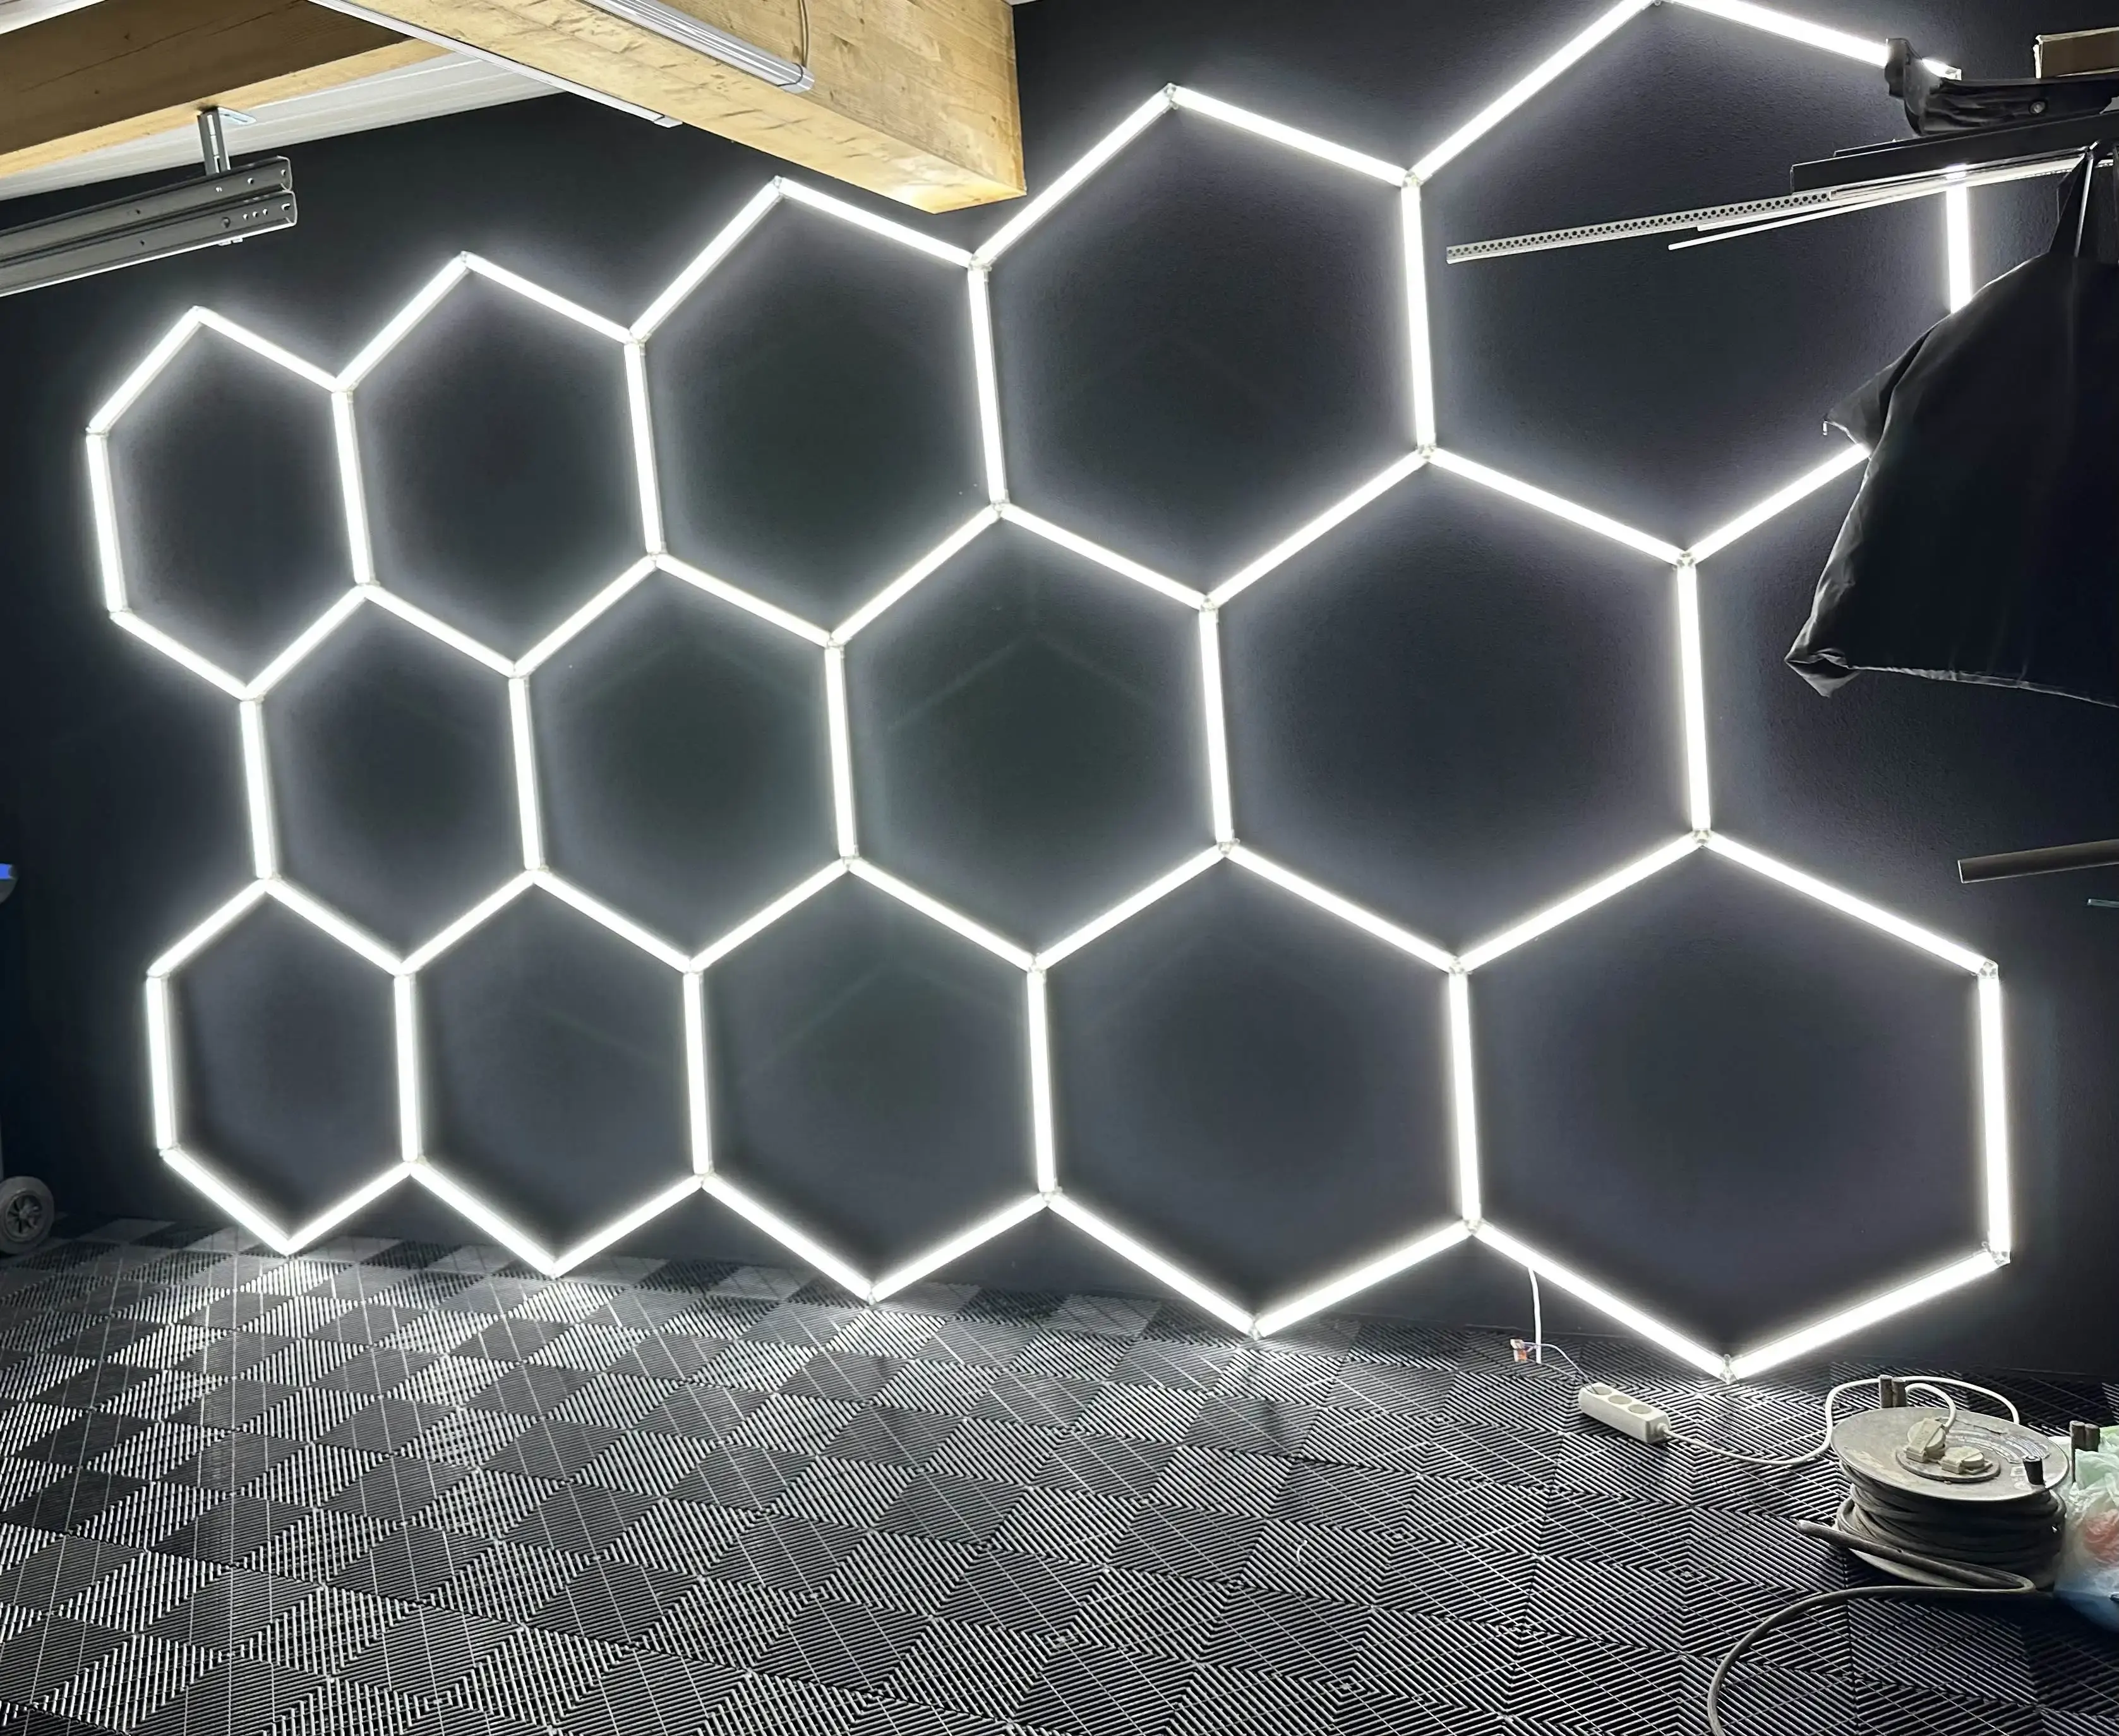 Honeycomb Auto Detailing LED Work Light Ceiling Design Hexagonal Led Lights for Car Wash Station Garage Machine Repair Room